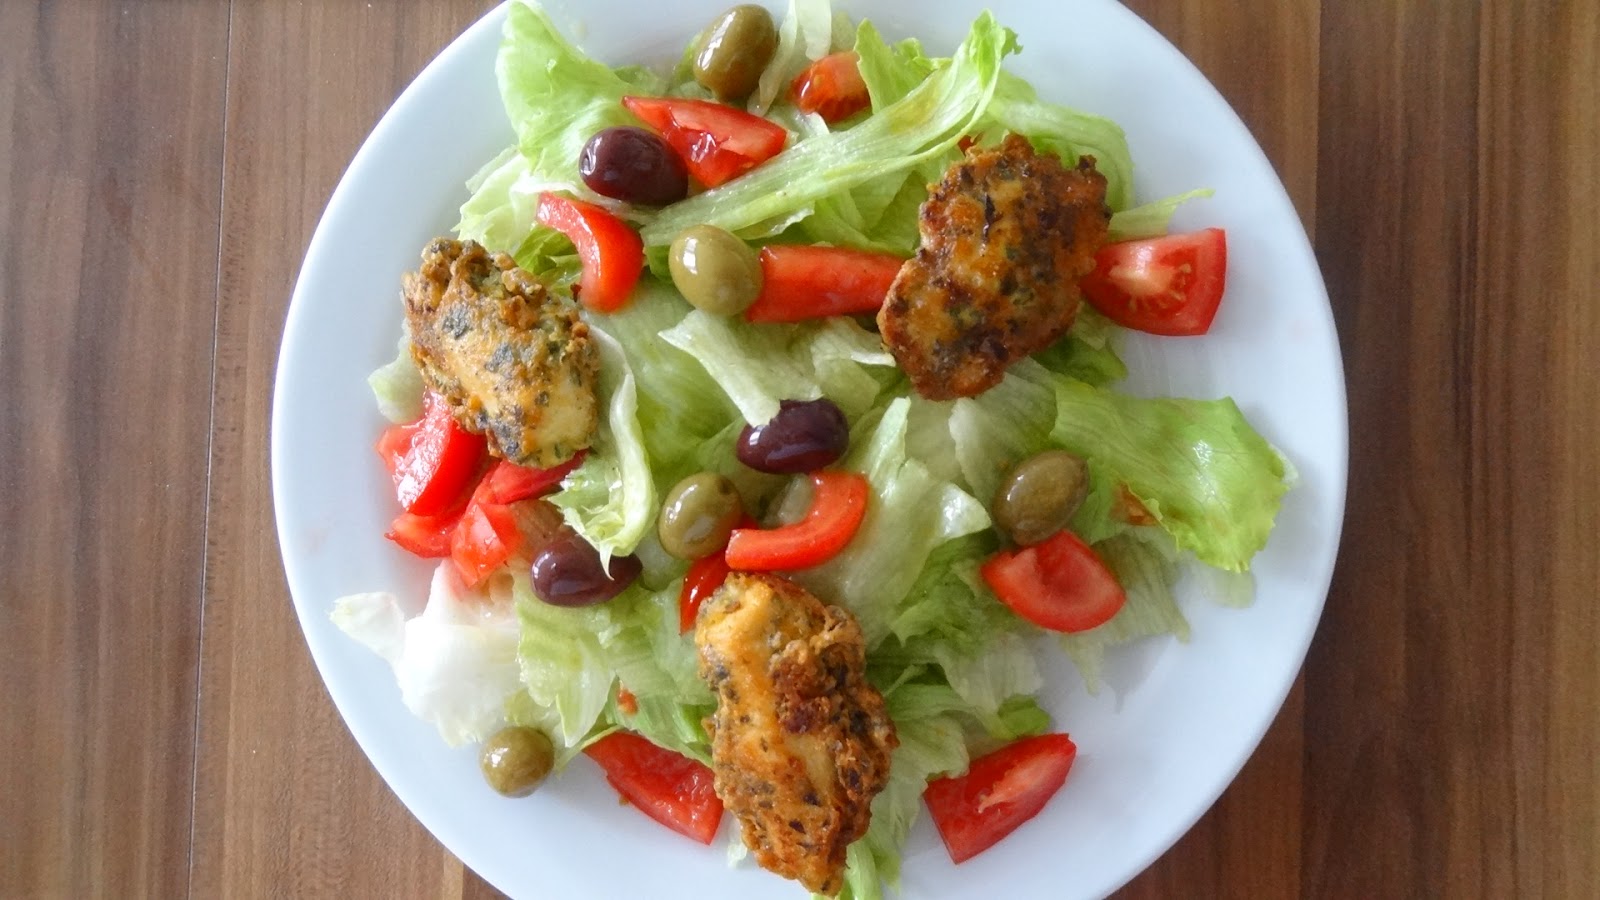 Karina Kocht!: Salat mit gebackenen Hühnerstreifen mal anders...